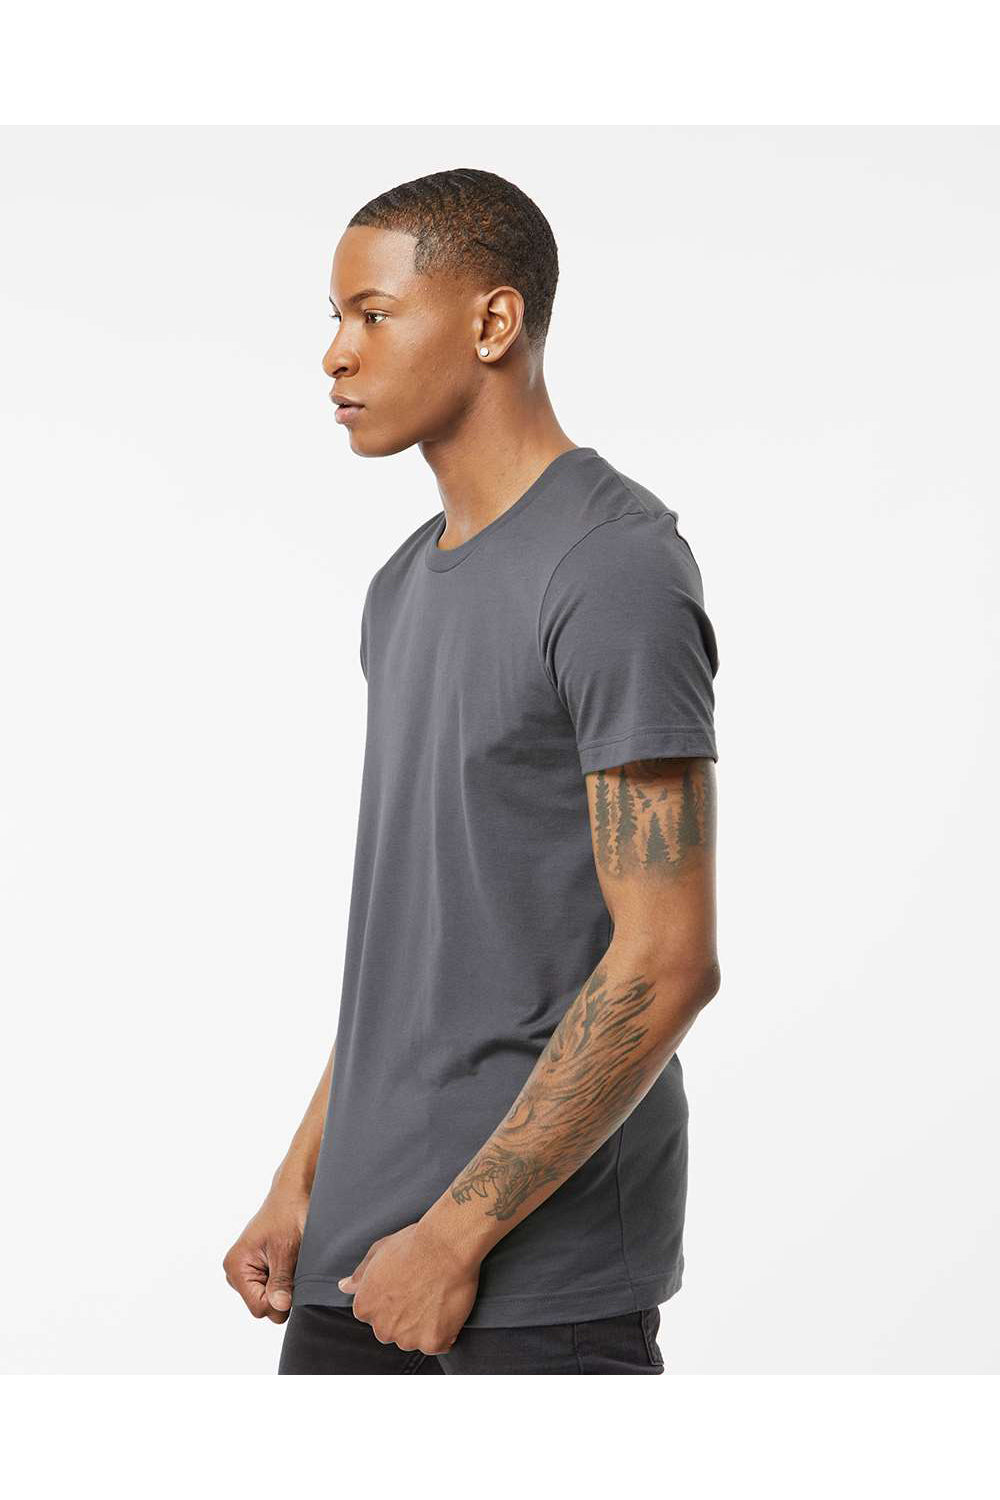 Tultex 502 Mens Premium Short Sleeve Crewneck T-Shirt Charcoal Grey Model Side